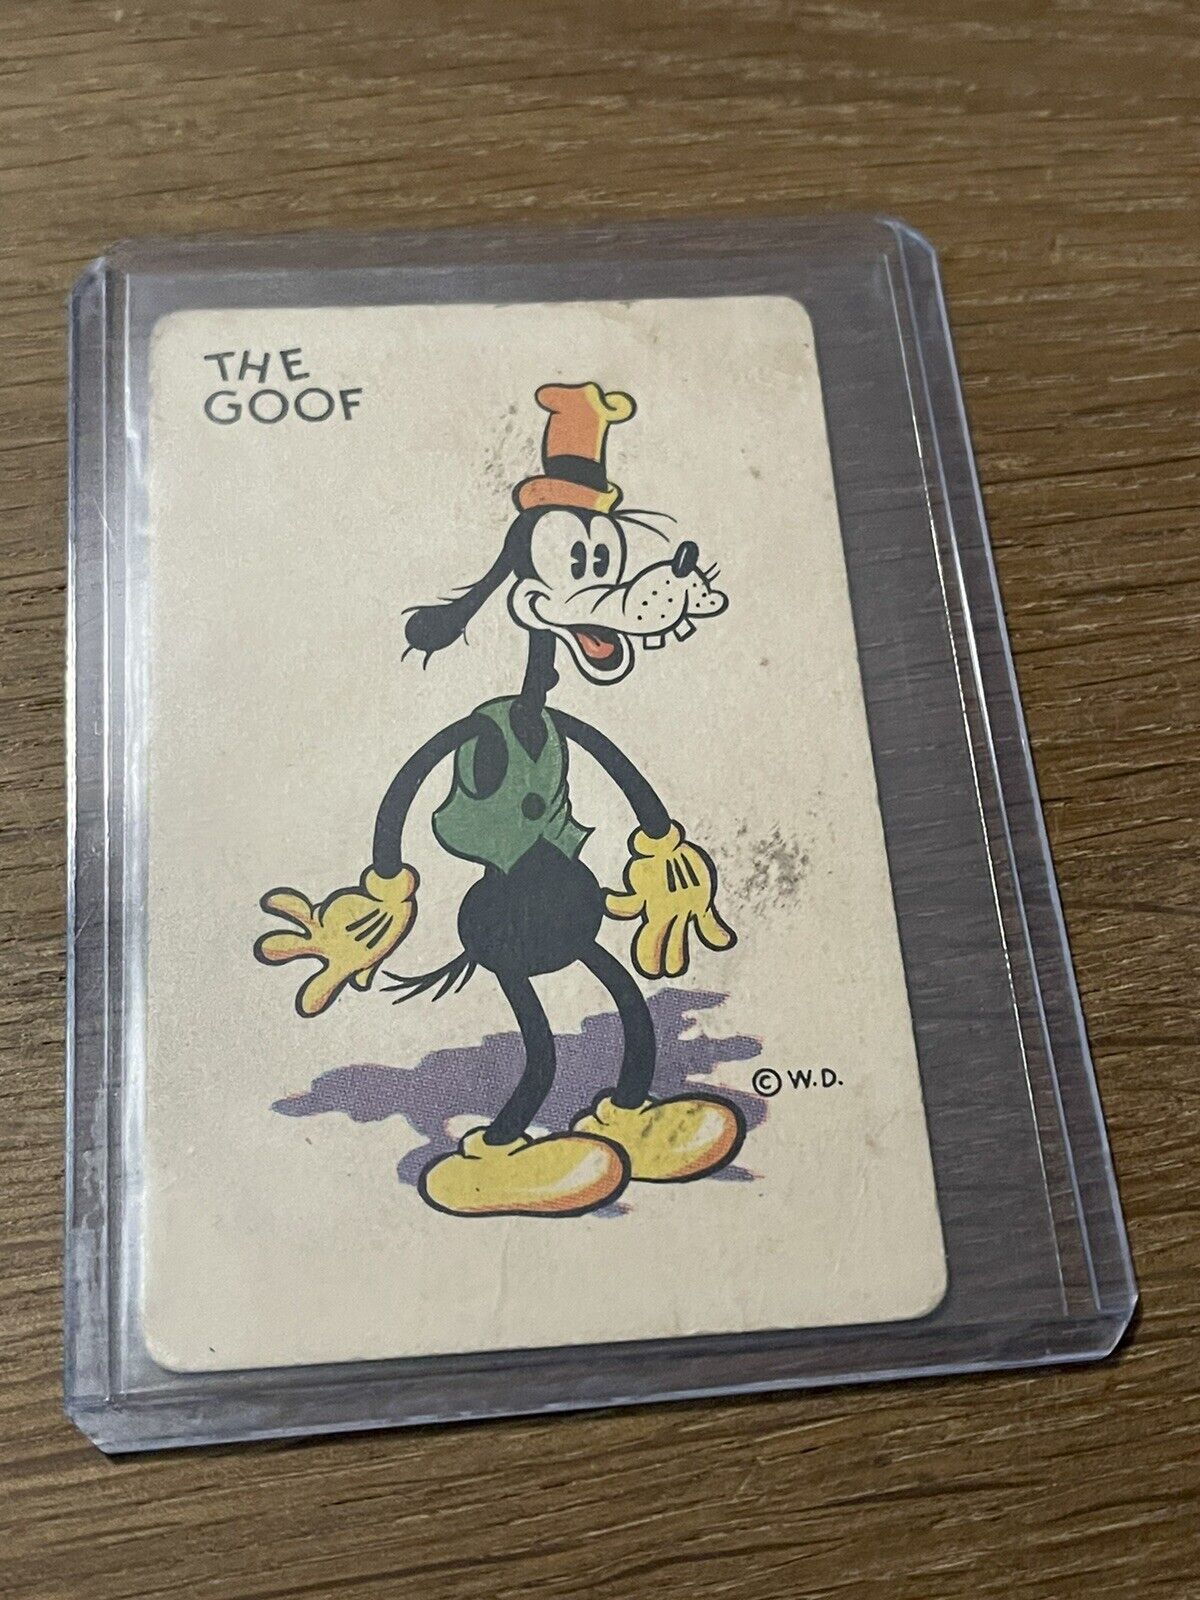 Vintage Whitman Disney The Goof GOOFY Old Maid Card Walt Disney 1935 Rookie Card